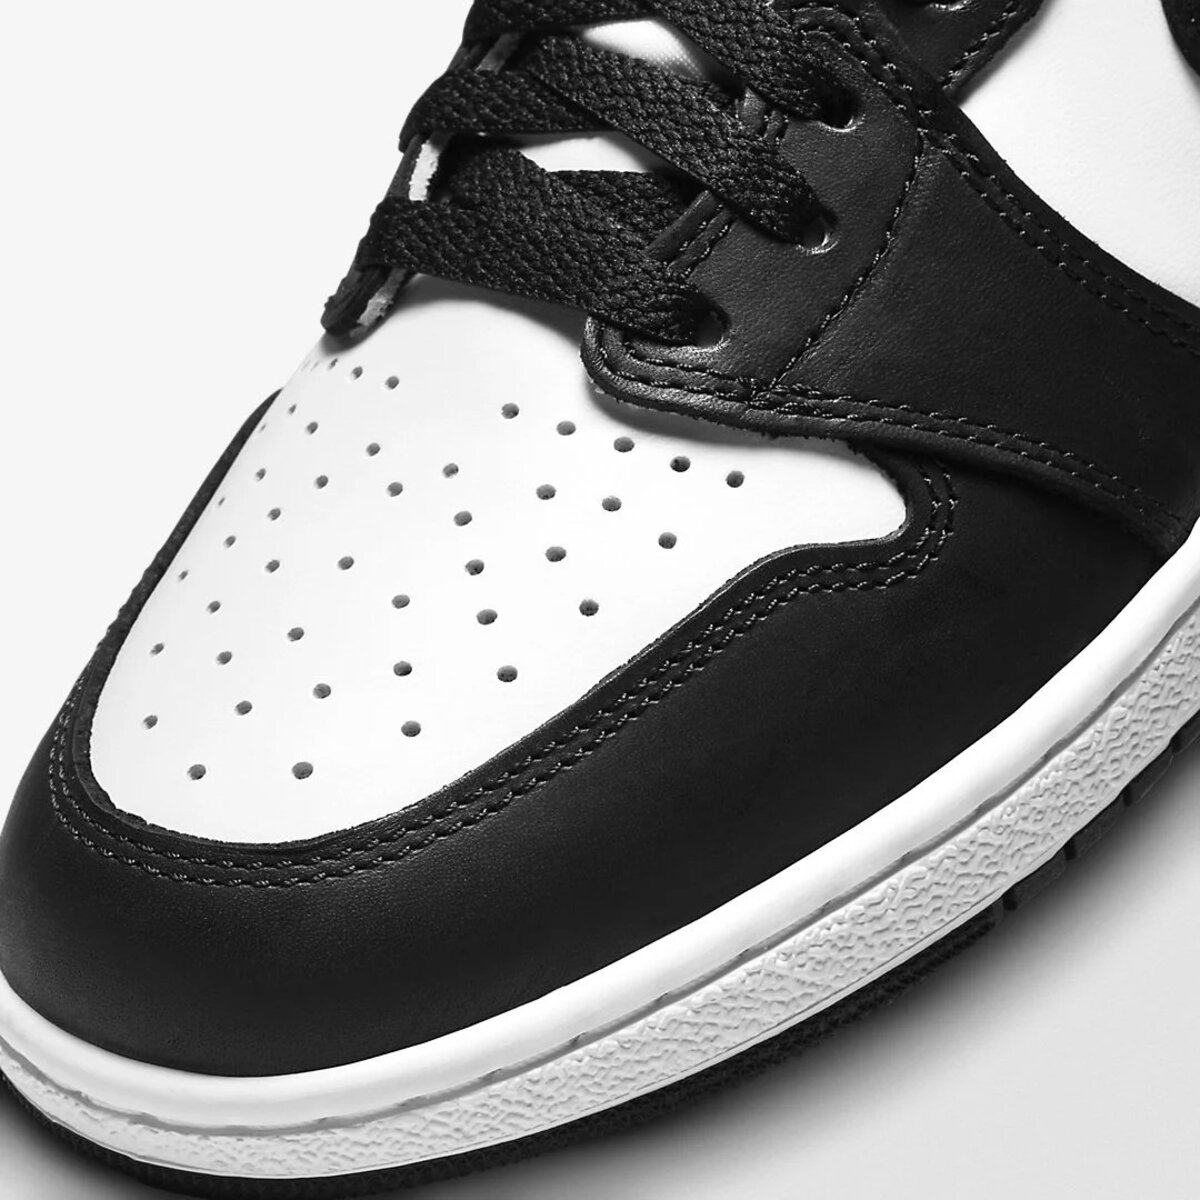  Air Jordan 1 High ‘85 Black/White